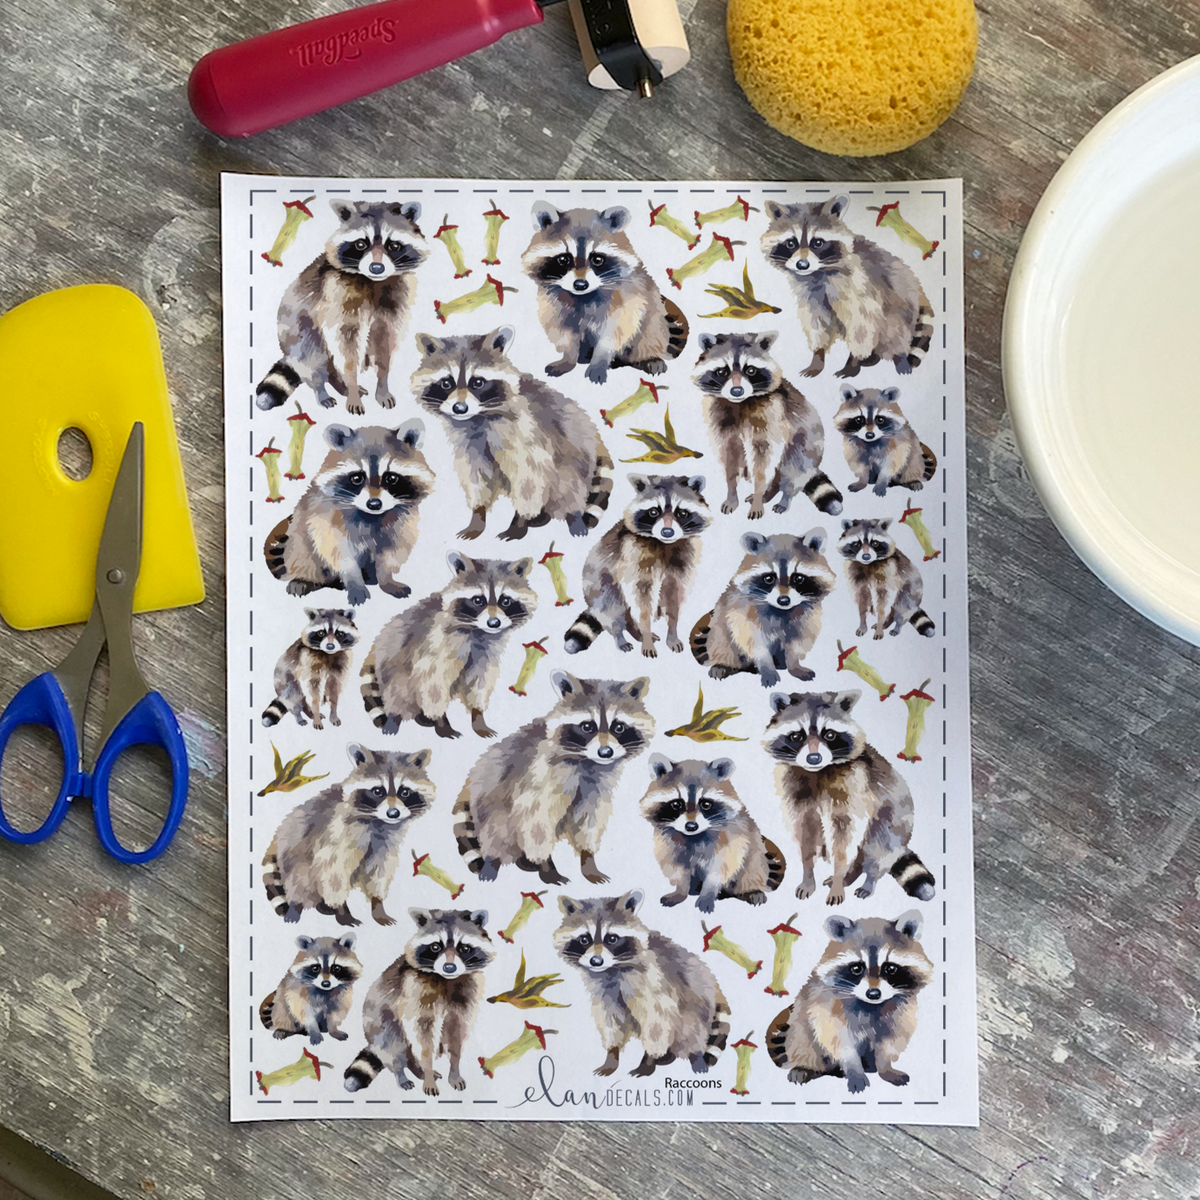 Raccoons - Overglaze Decal Sheet